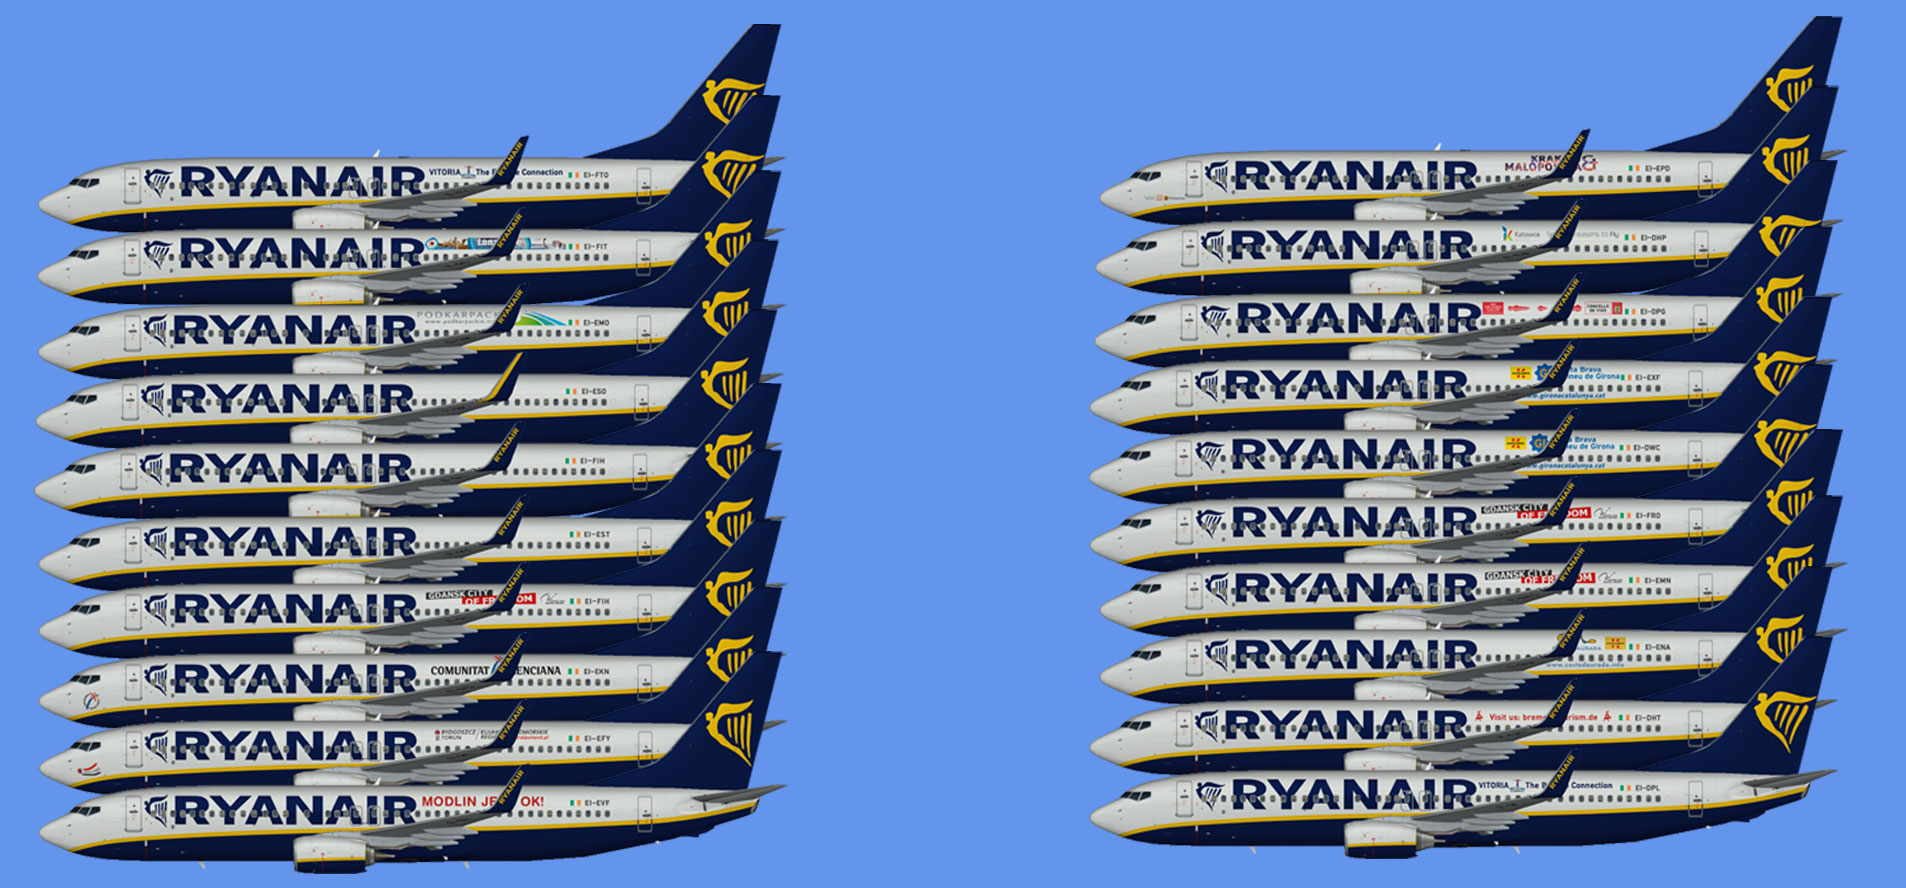 Ryanair 737-800 fleet